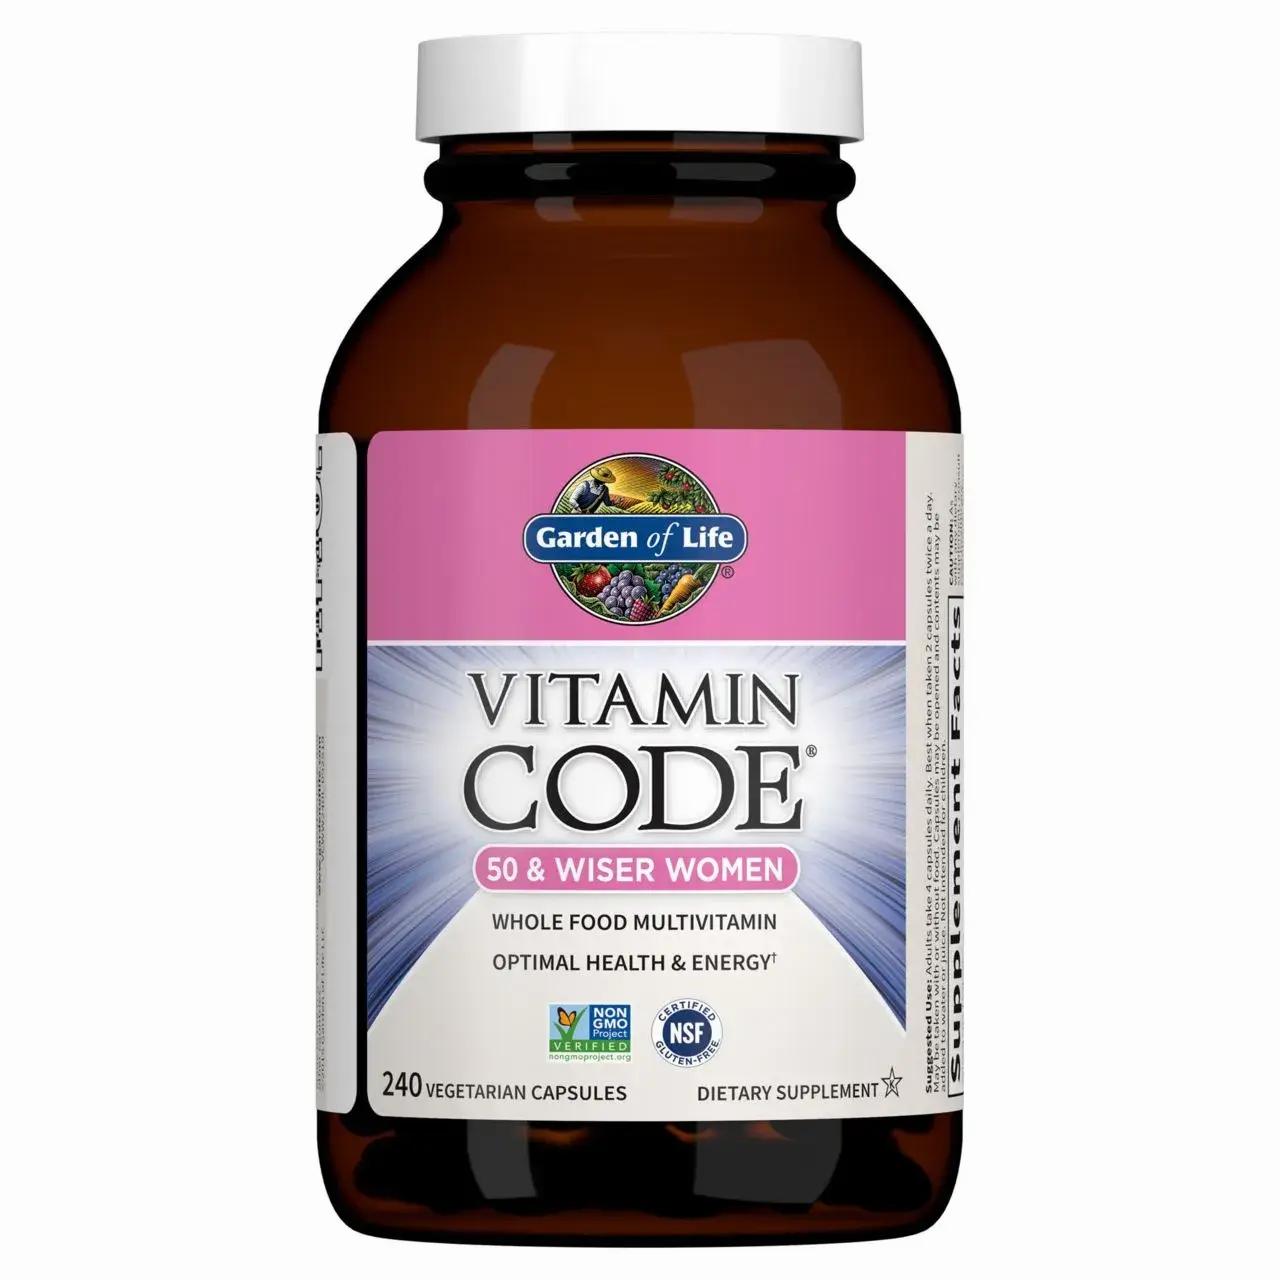 A brown bottle of Vitamin Code 50 & Wiser Women multivitamins from Garden of Life.